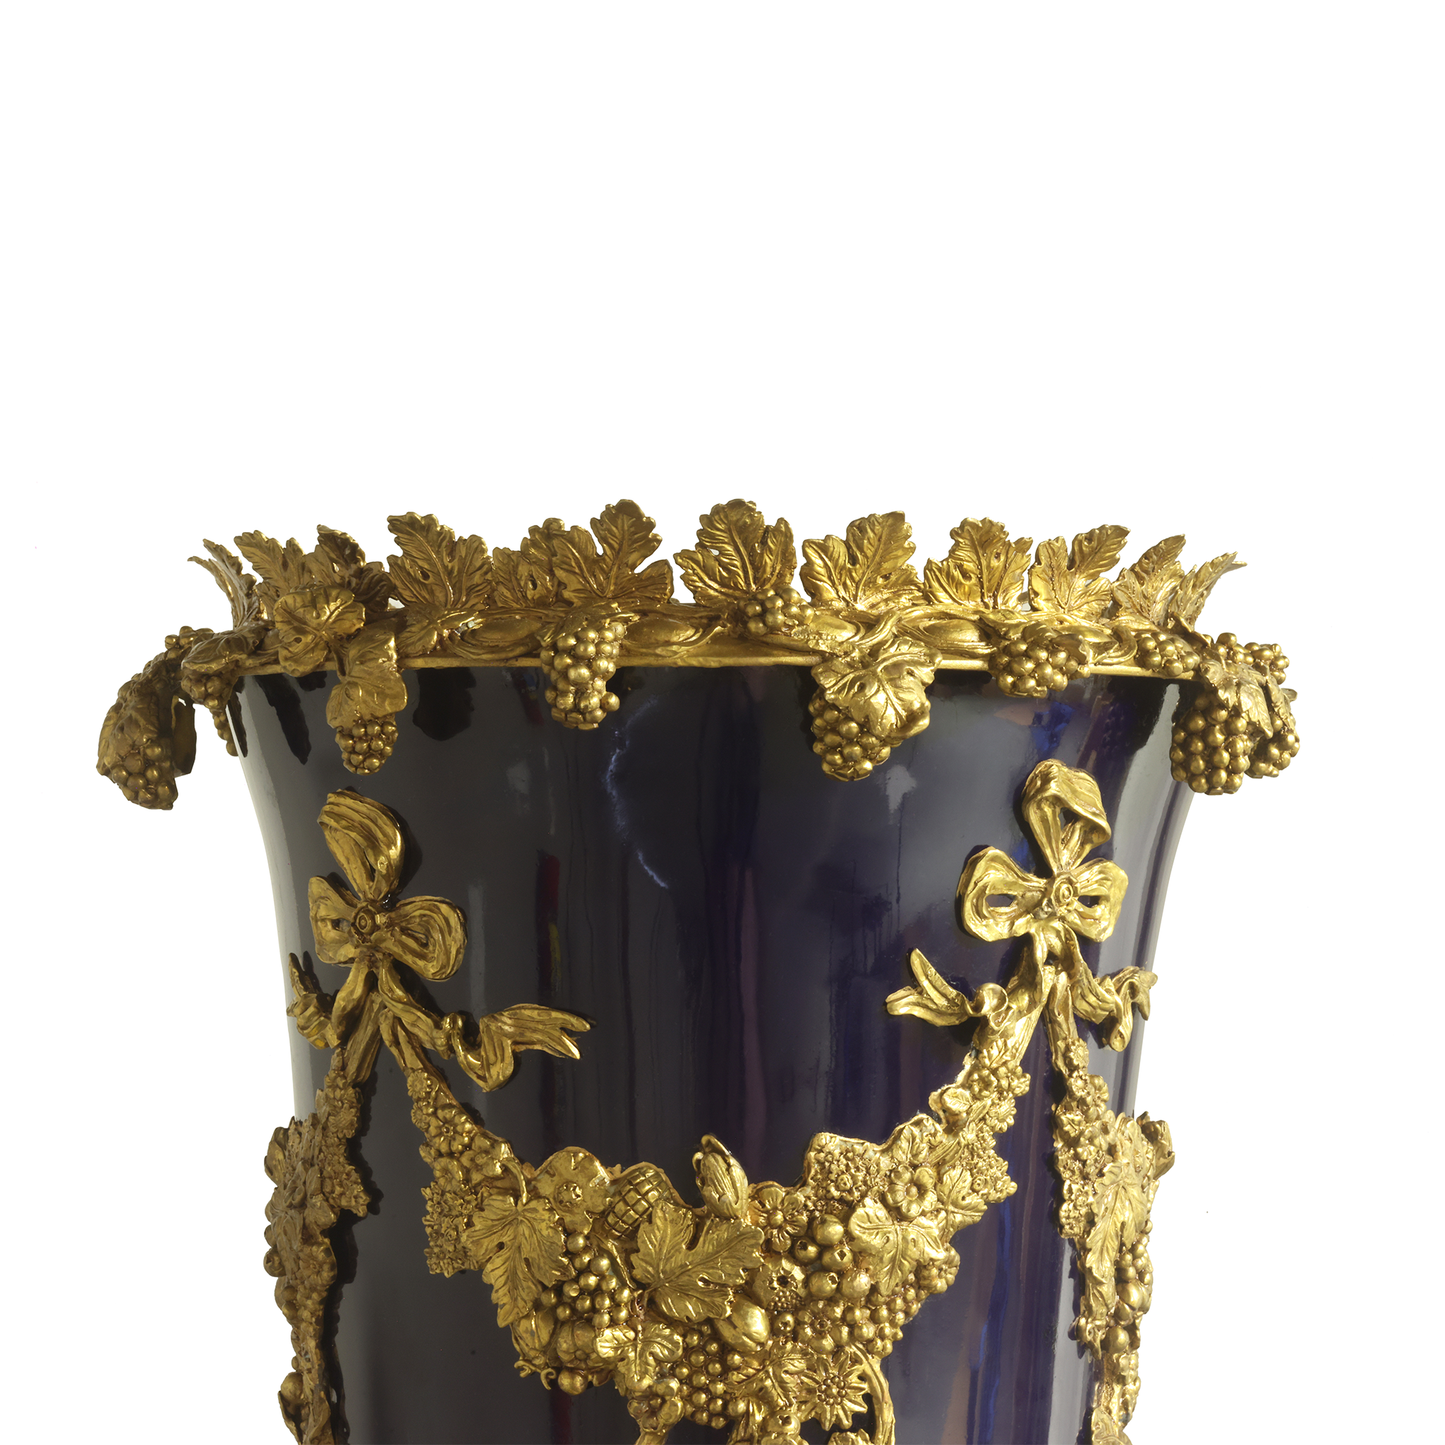 Gorgeous Bronze and Porcelain Vase